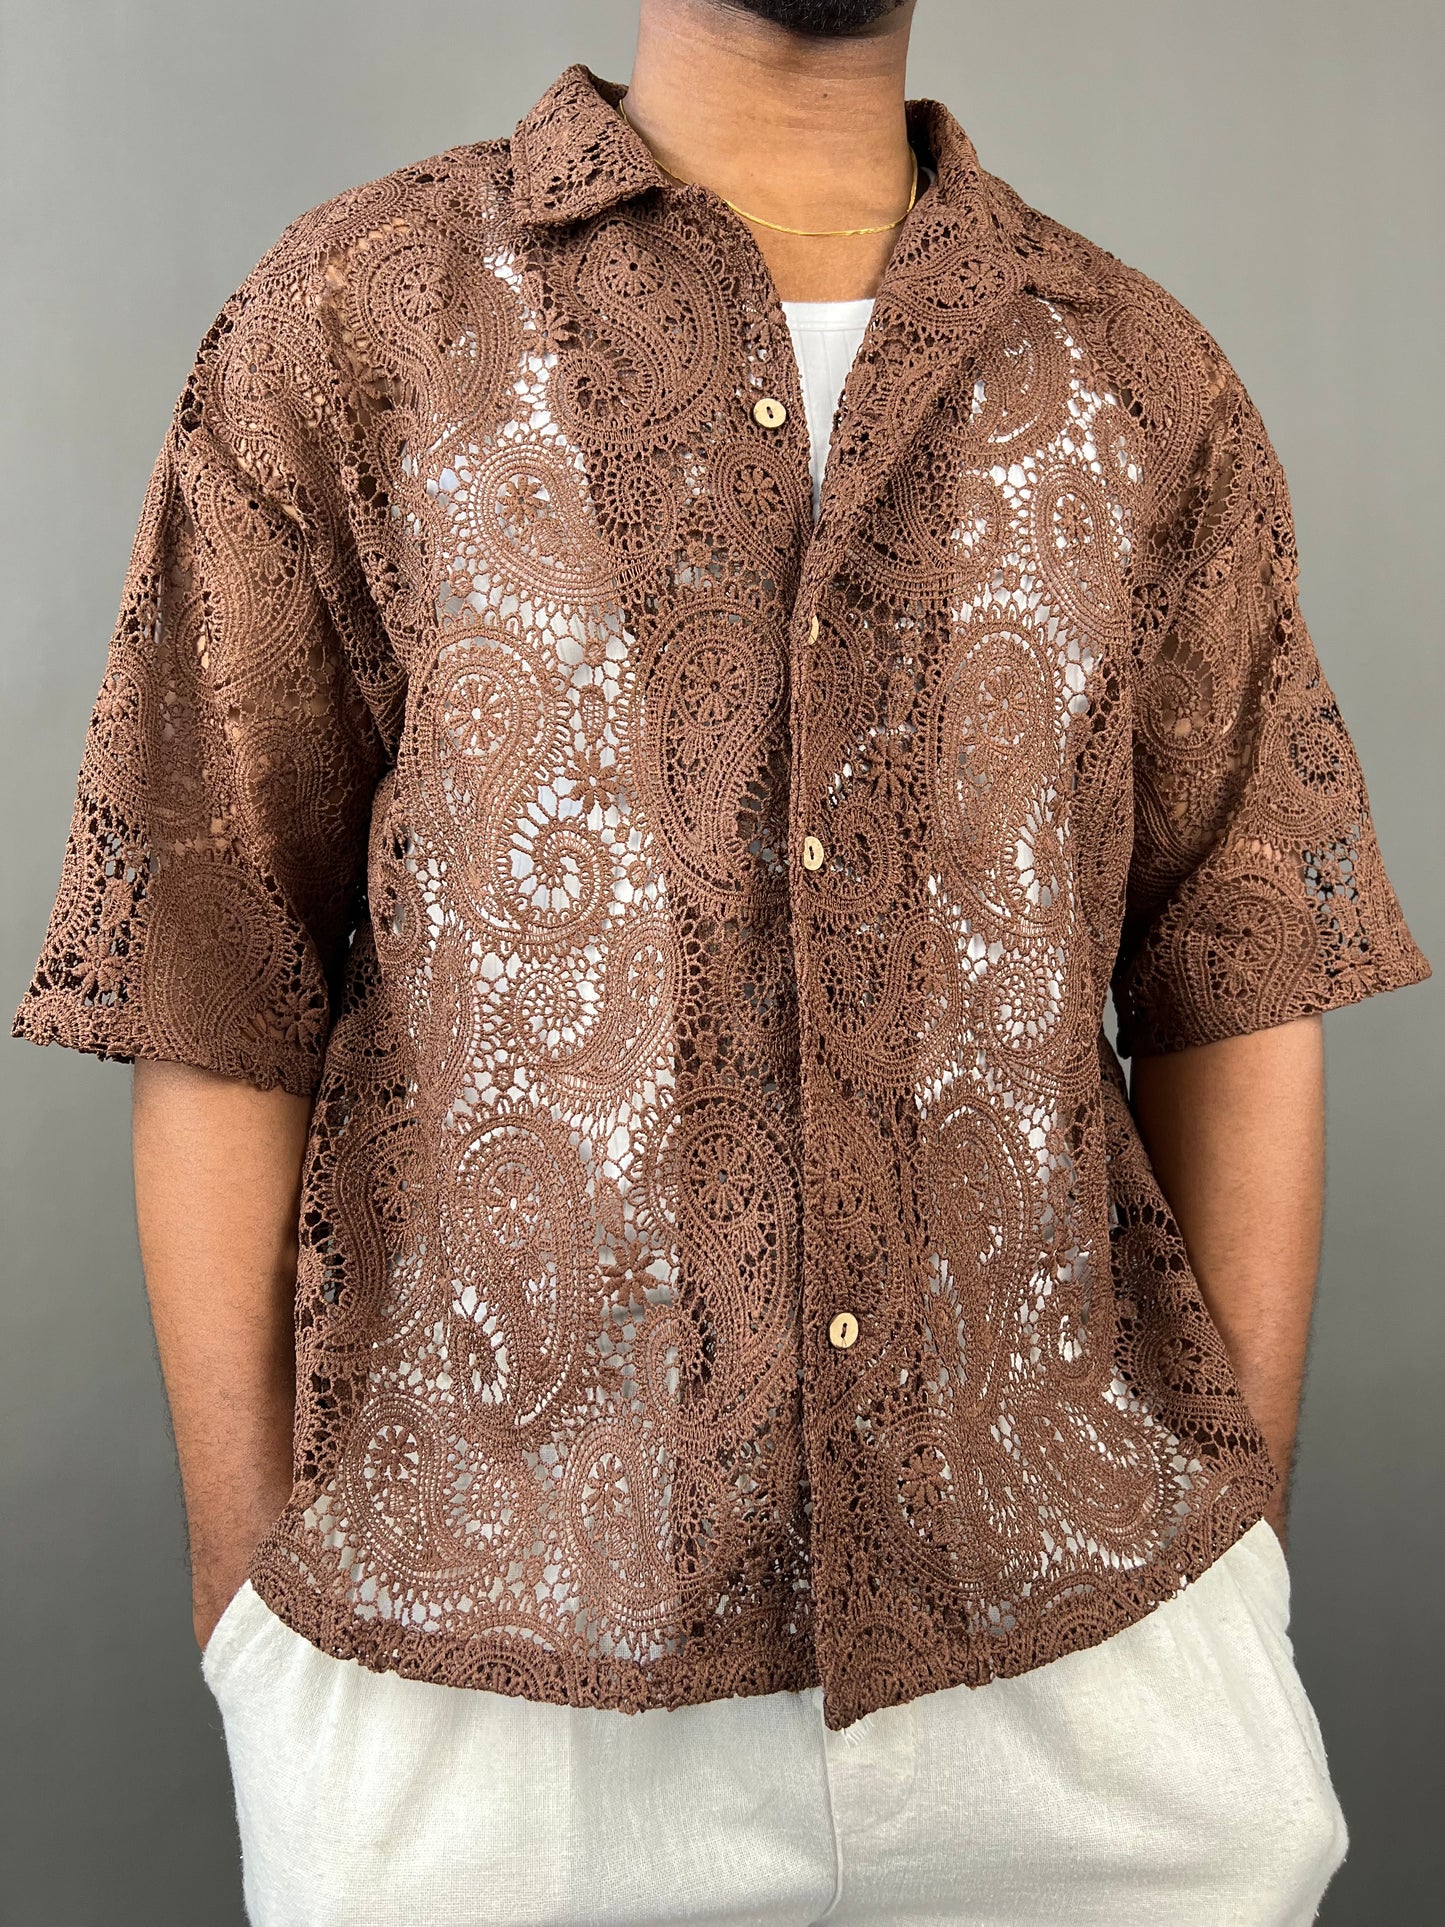 Garm Island Rico Crotchet Shirt in brown